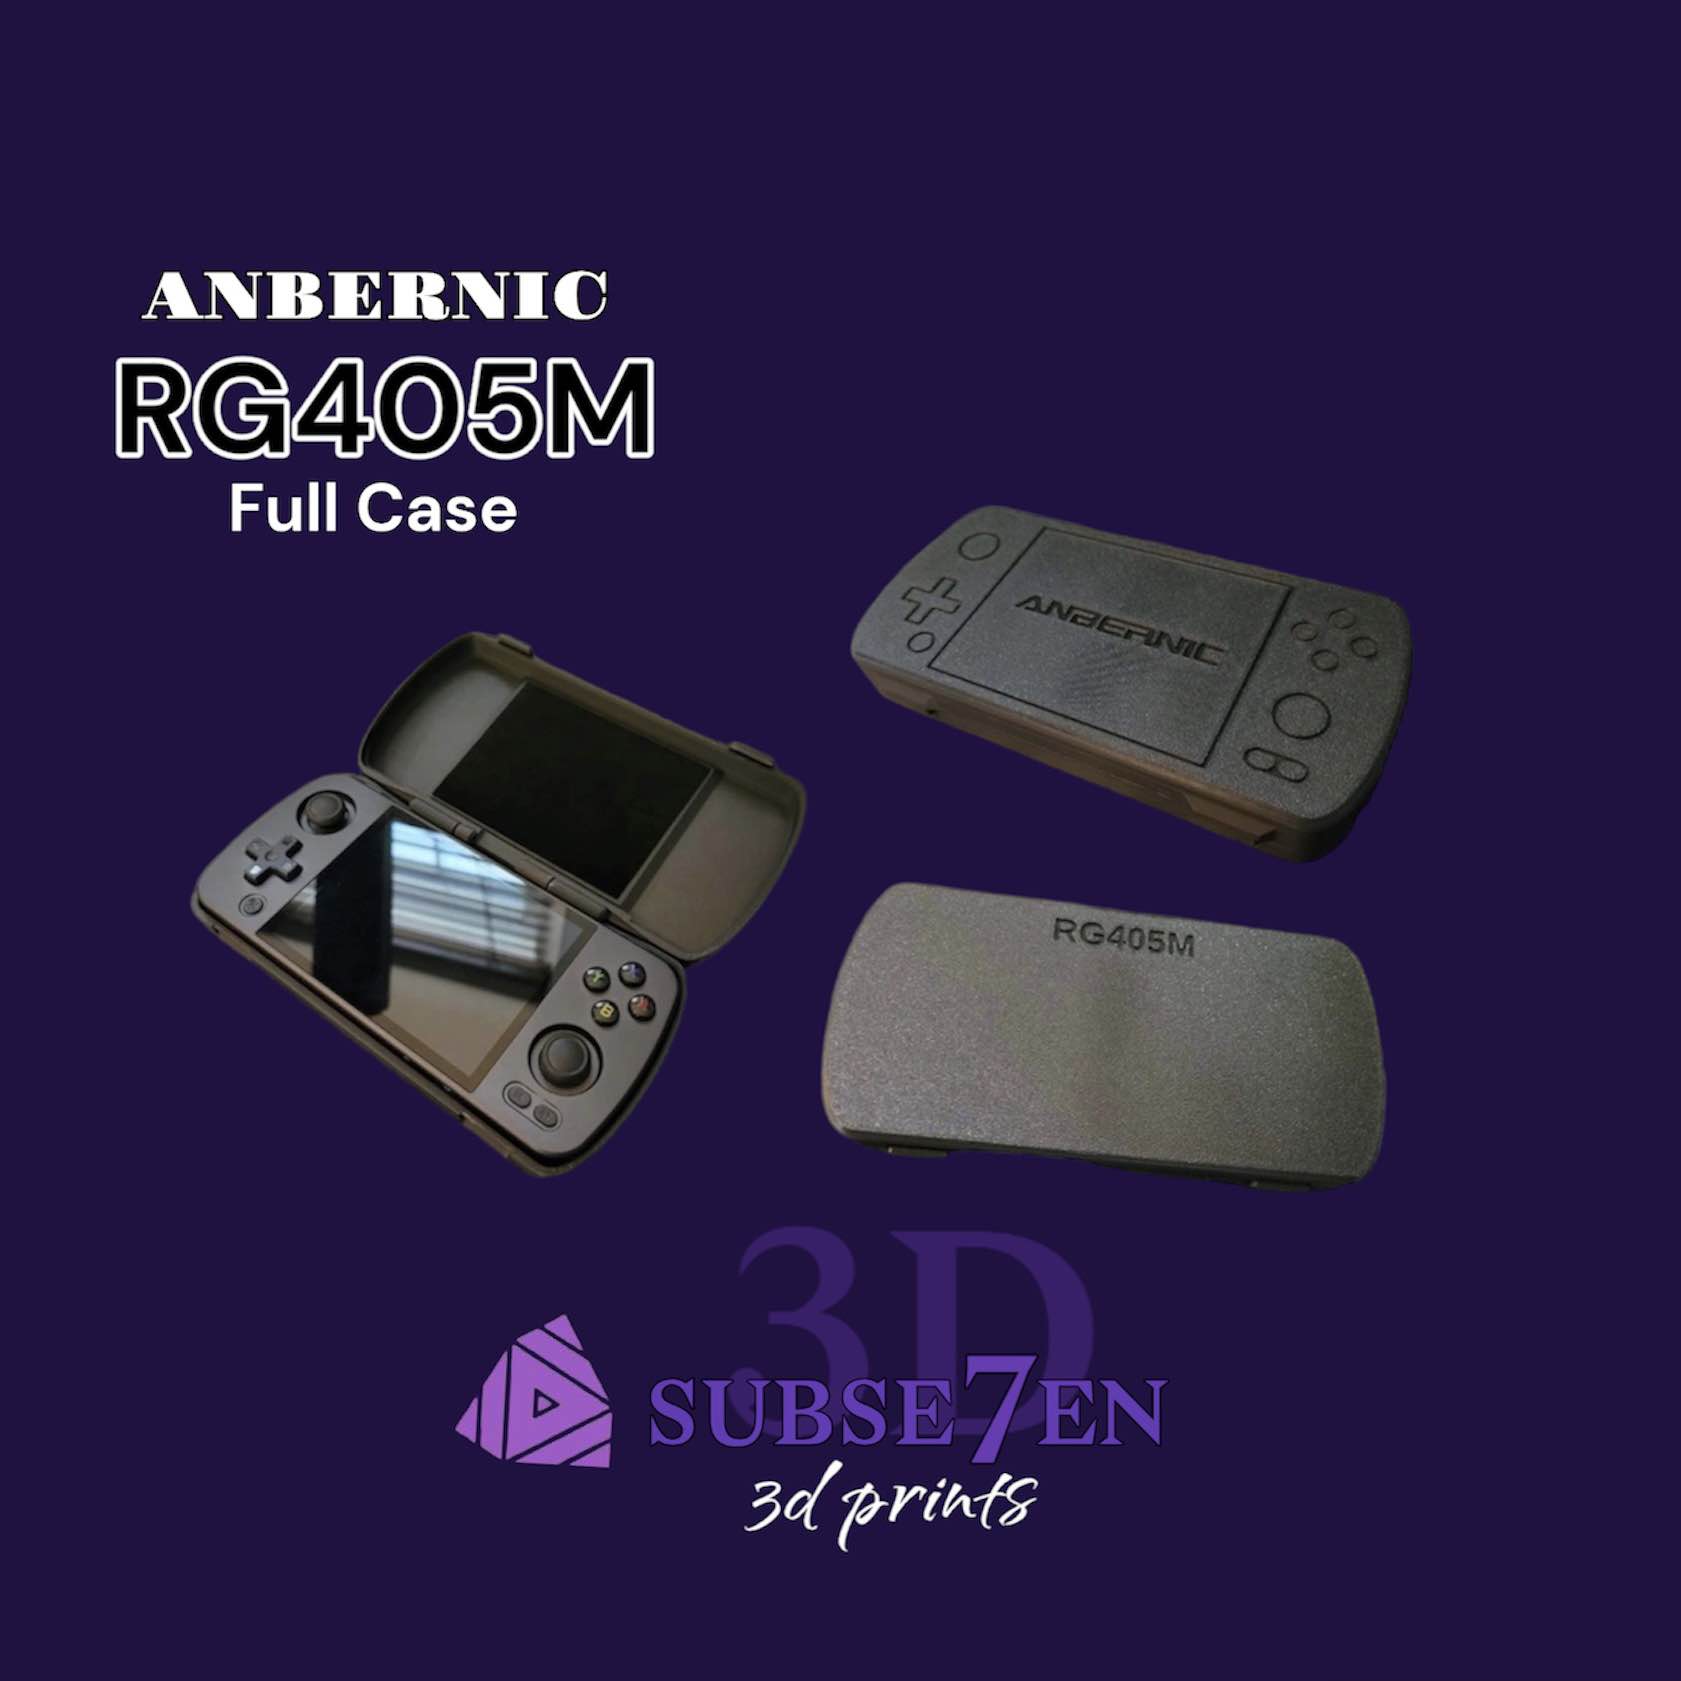 Anbernic Rg405m 3D Printed Case retro gaming handheld gaming accessories